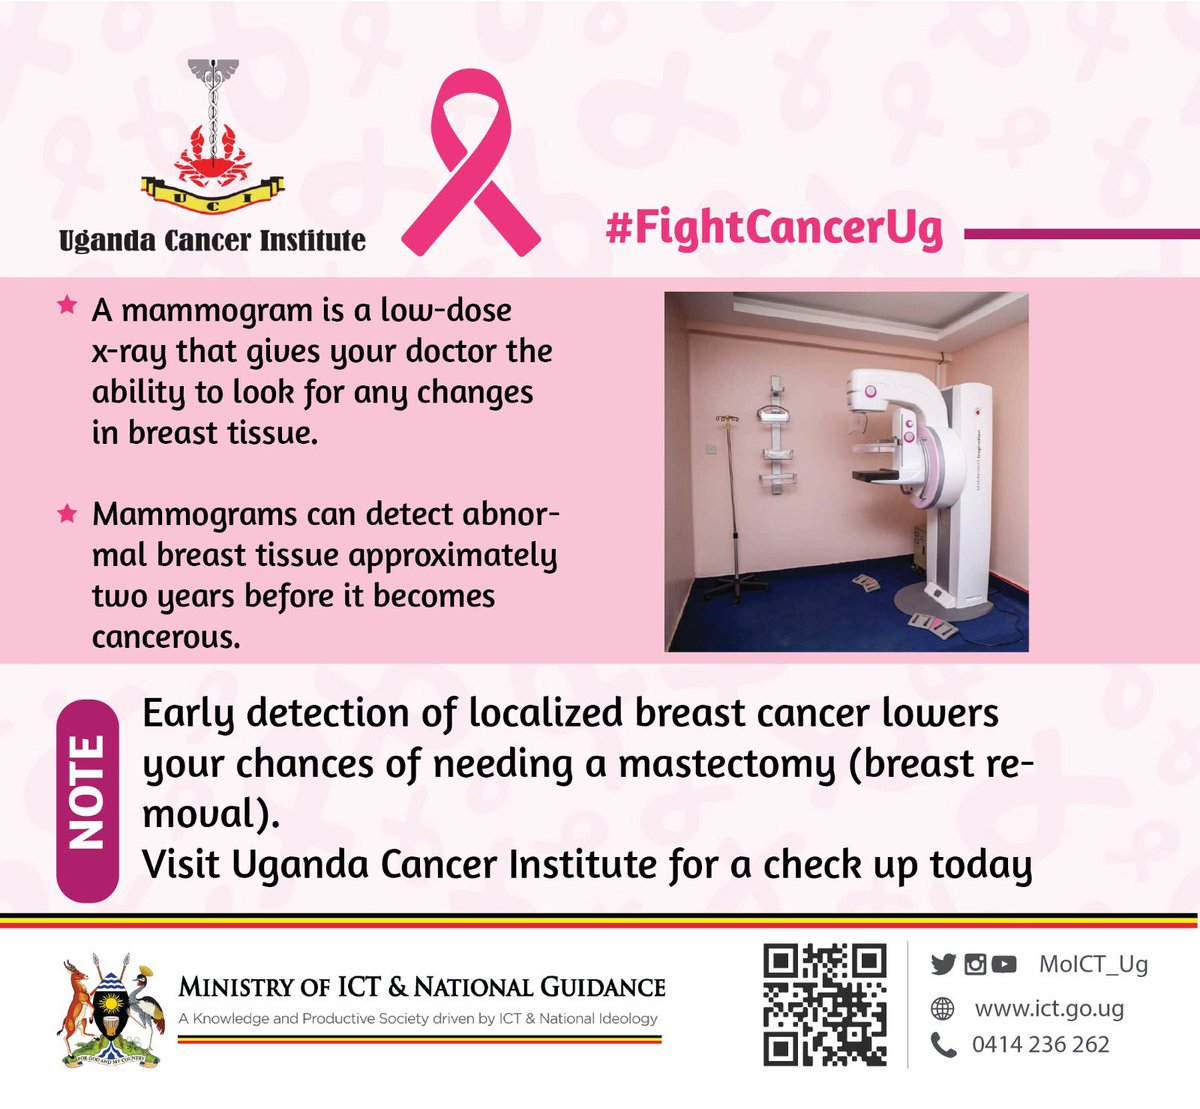 Take time off your busy schedule and visit @UgandaCancerIns for a check up.

@MinofHealthUG @UgCancerSociety @GovUganda @JaneRuth_Aceng @azawedde
#FightCancerUg #HealthUg